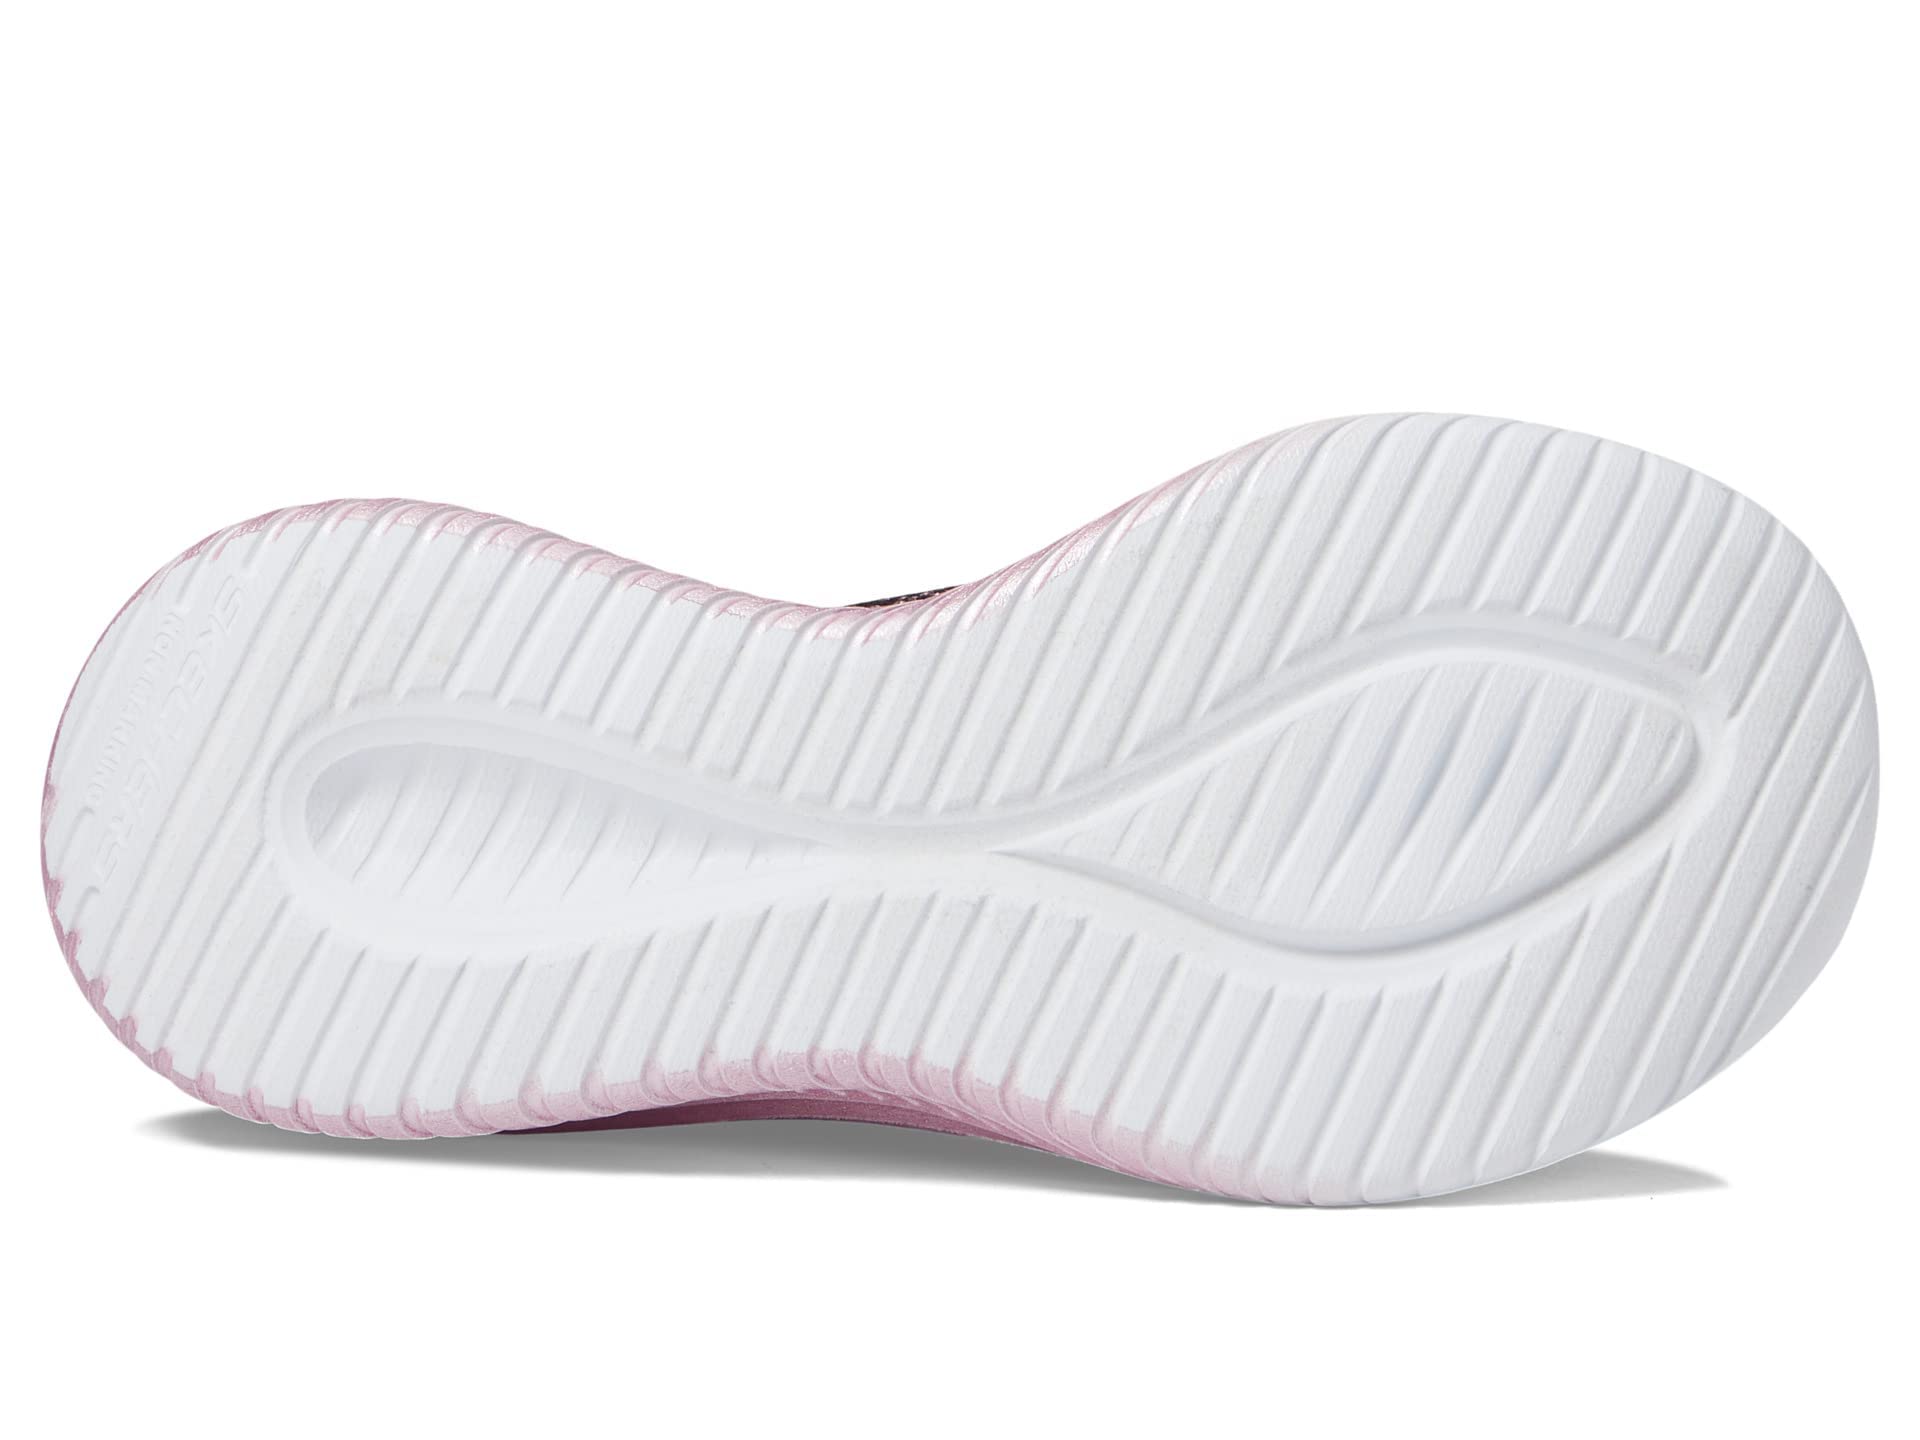 Skechers Unisex-Child Ultra Flex 3.0-All Things S Sneaker